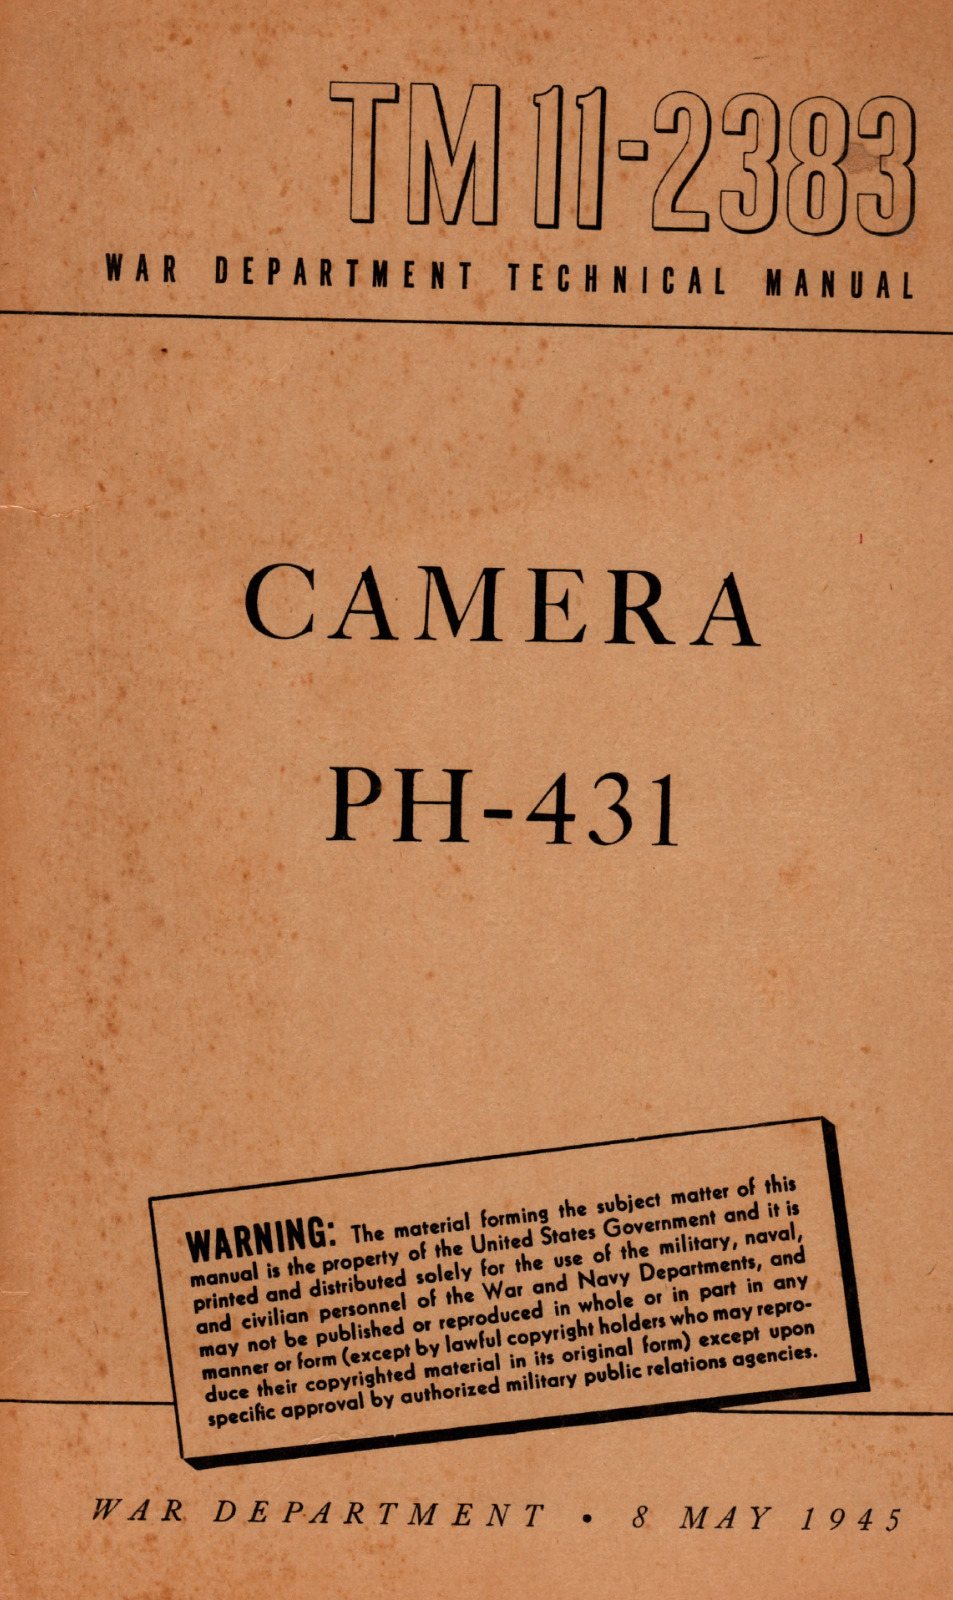 76 Page 1945 TM 11-2383 CAMERA PH-431 Cine - Kodak 16mm Movie Manual on Data CD